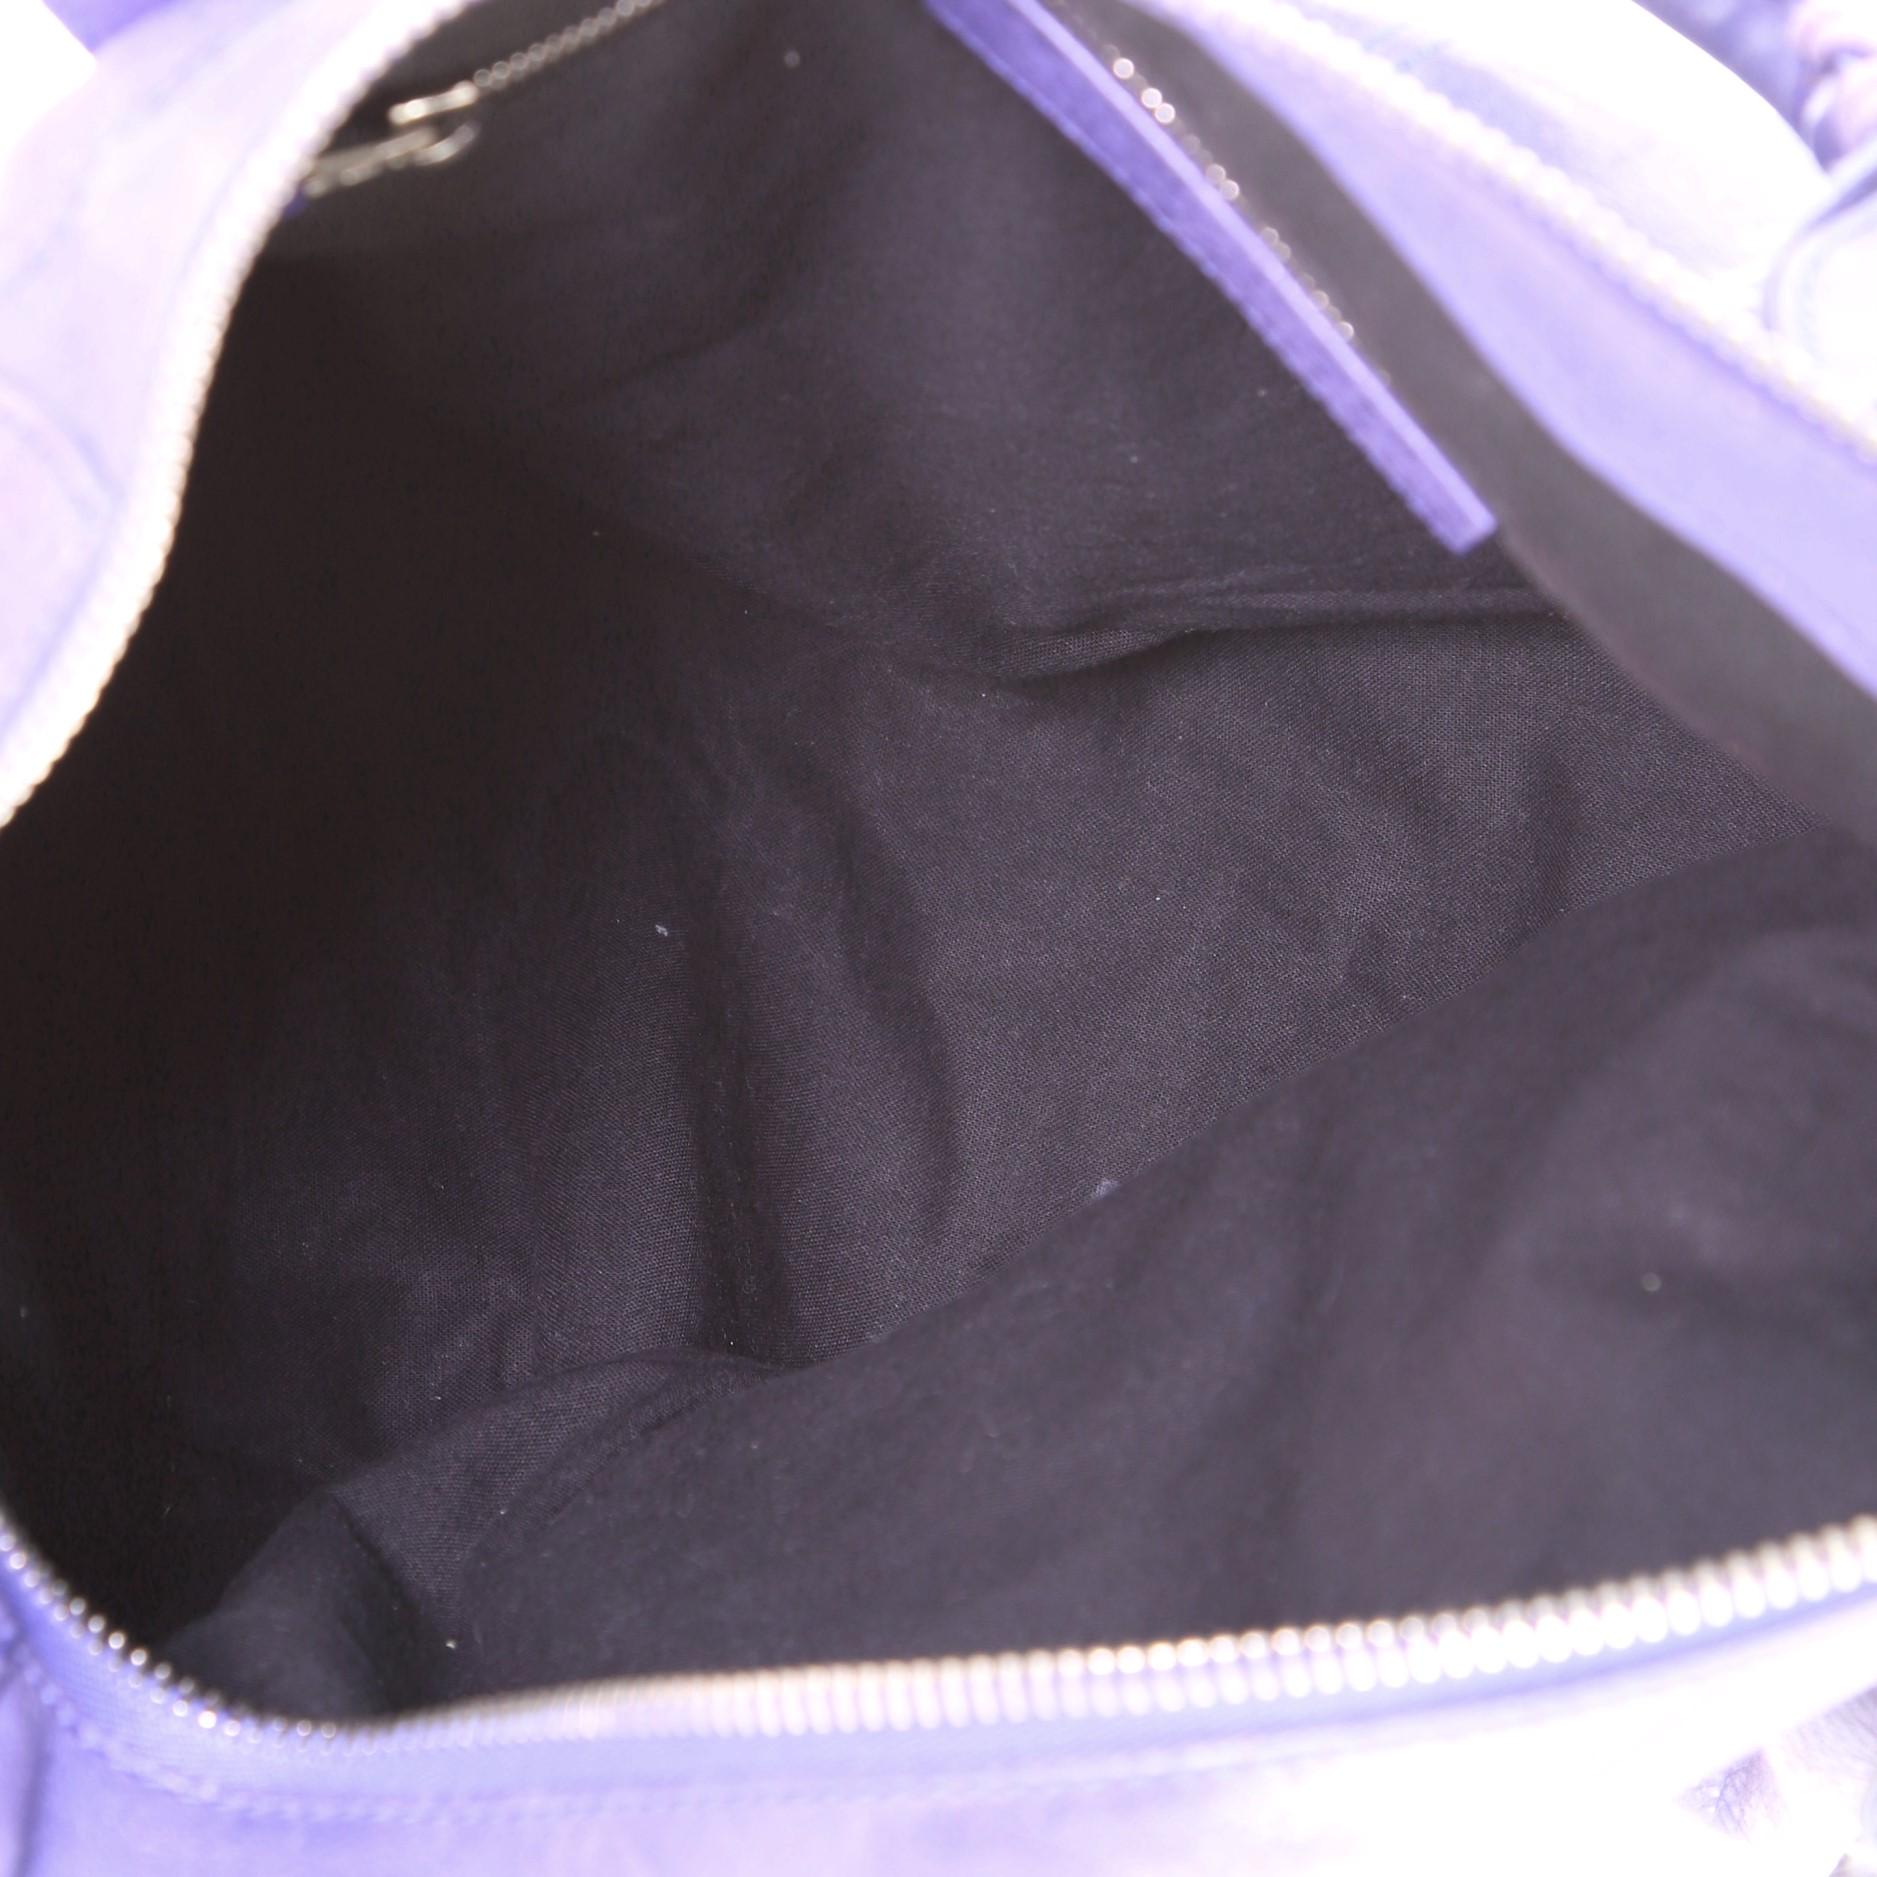 Gray Balenciaga Work Giant Studs Bag Leather